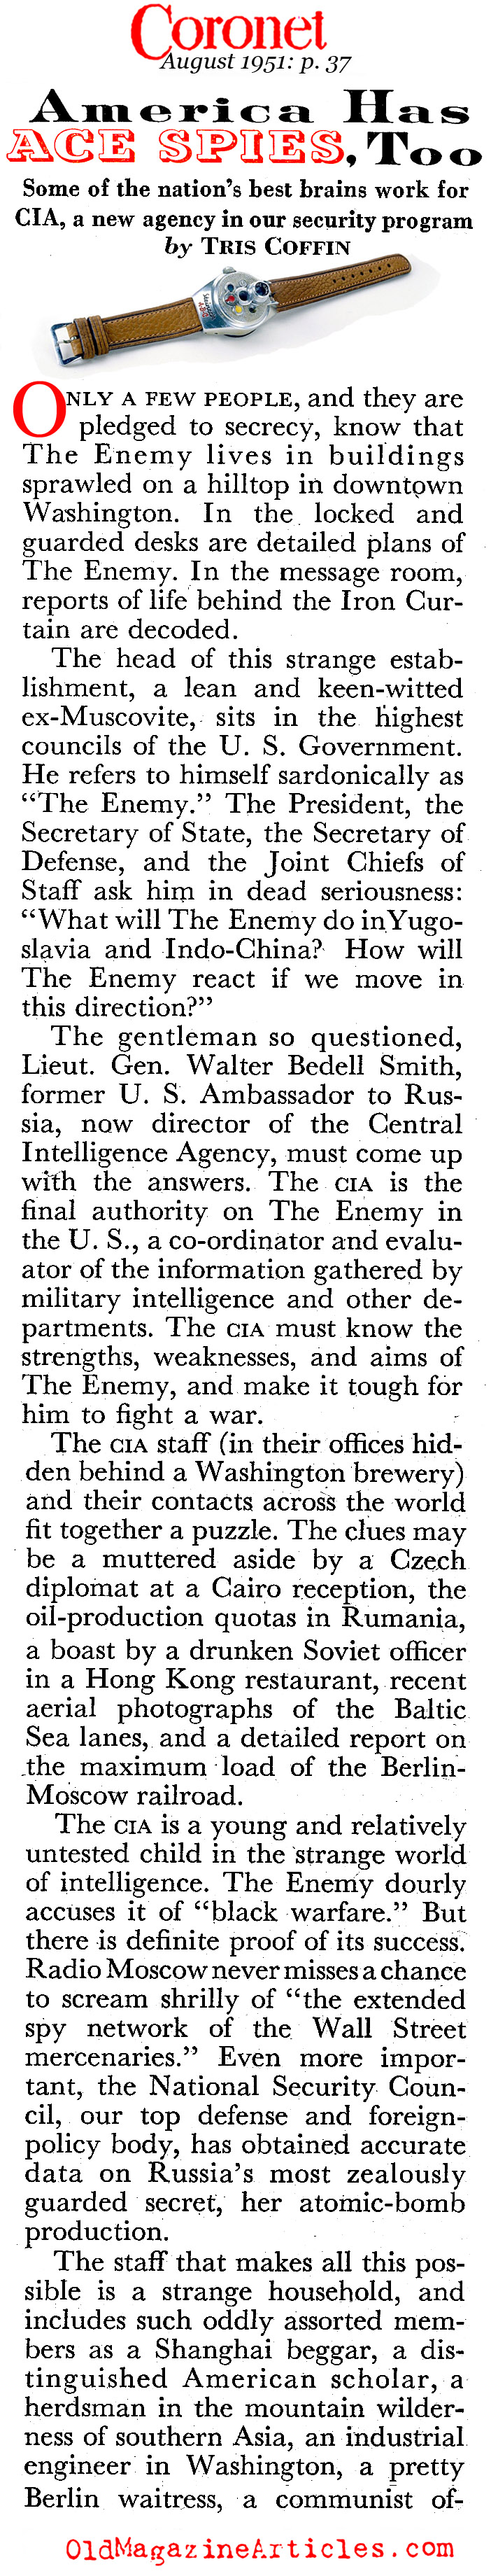 The Early CIA (Coronet Magazine, 1951)